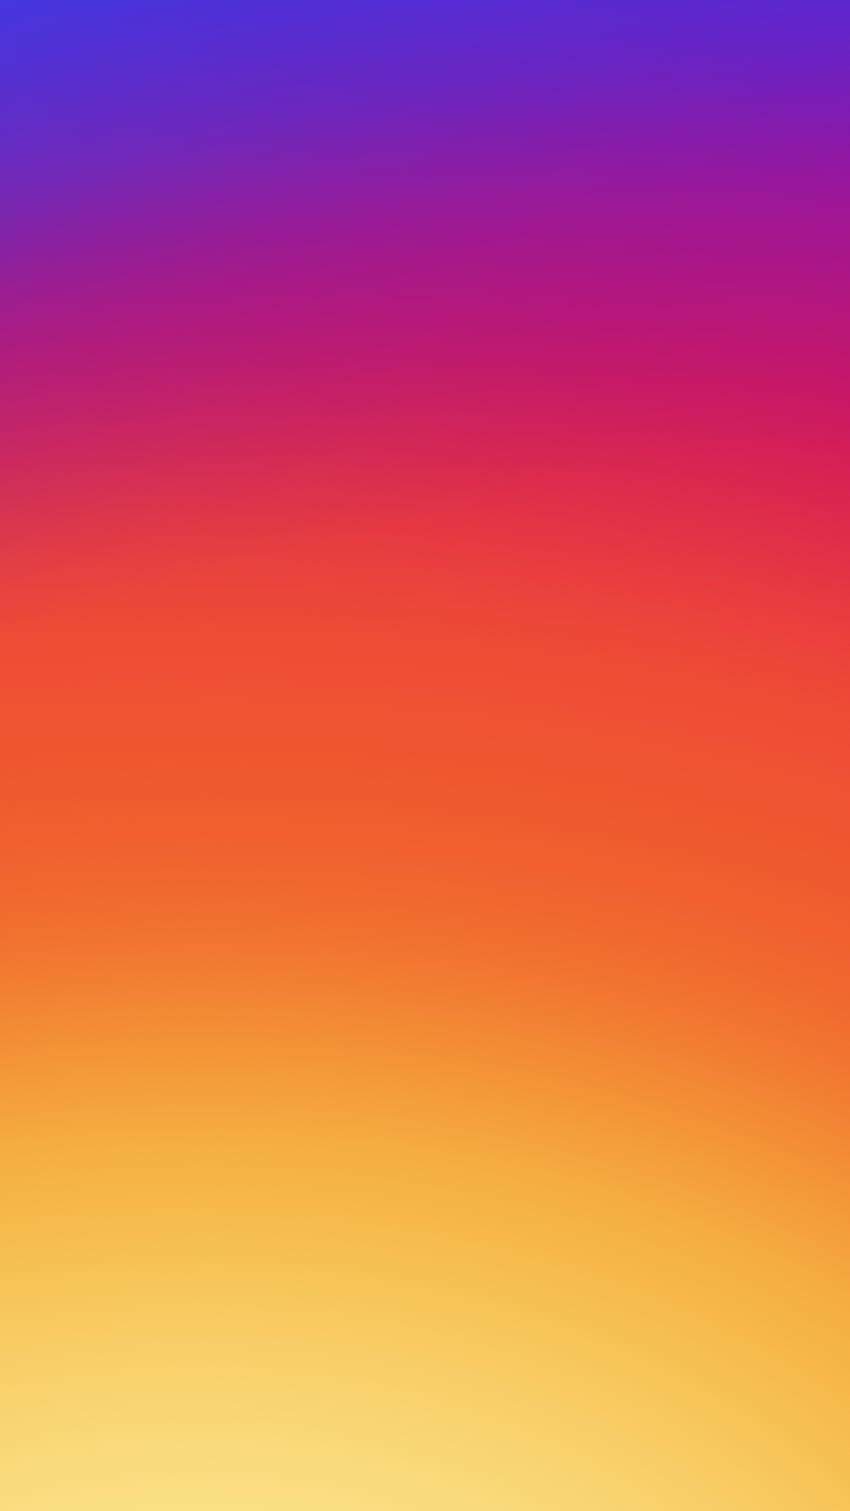 Weekends: Instagram Gradient for Mac, iPhone, orange and yellow gradient HD phone wallpaper